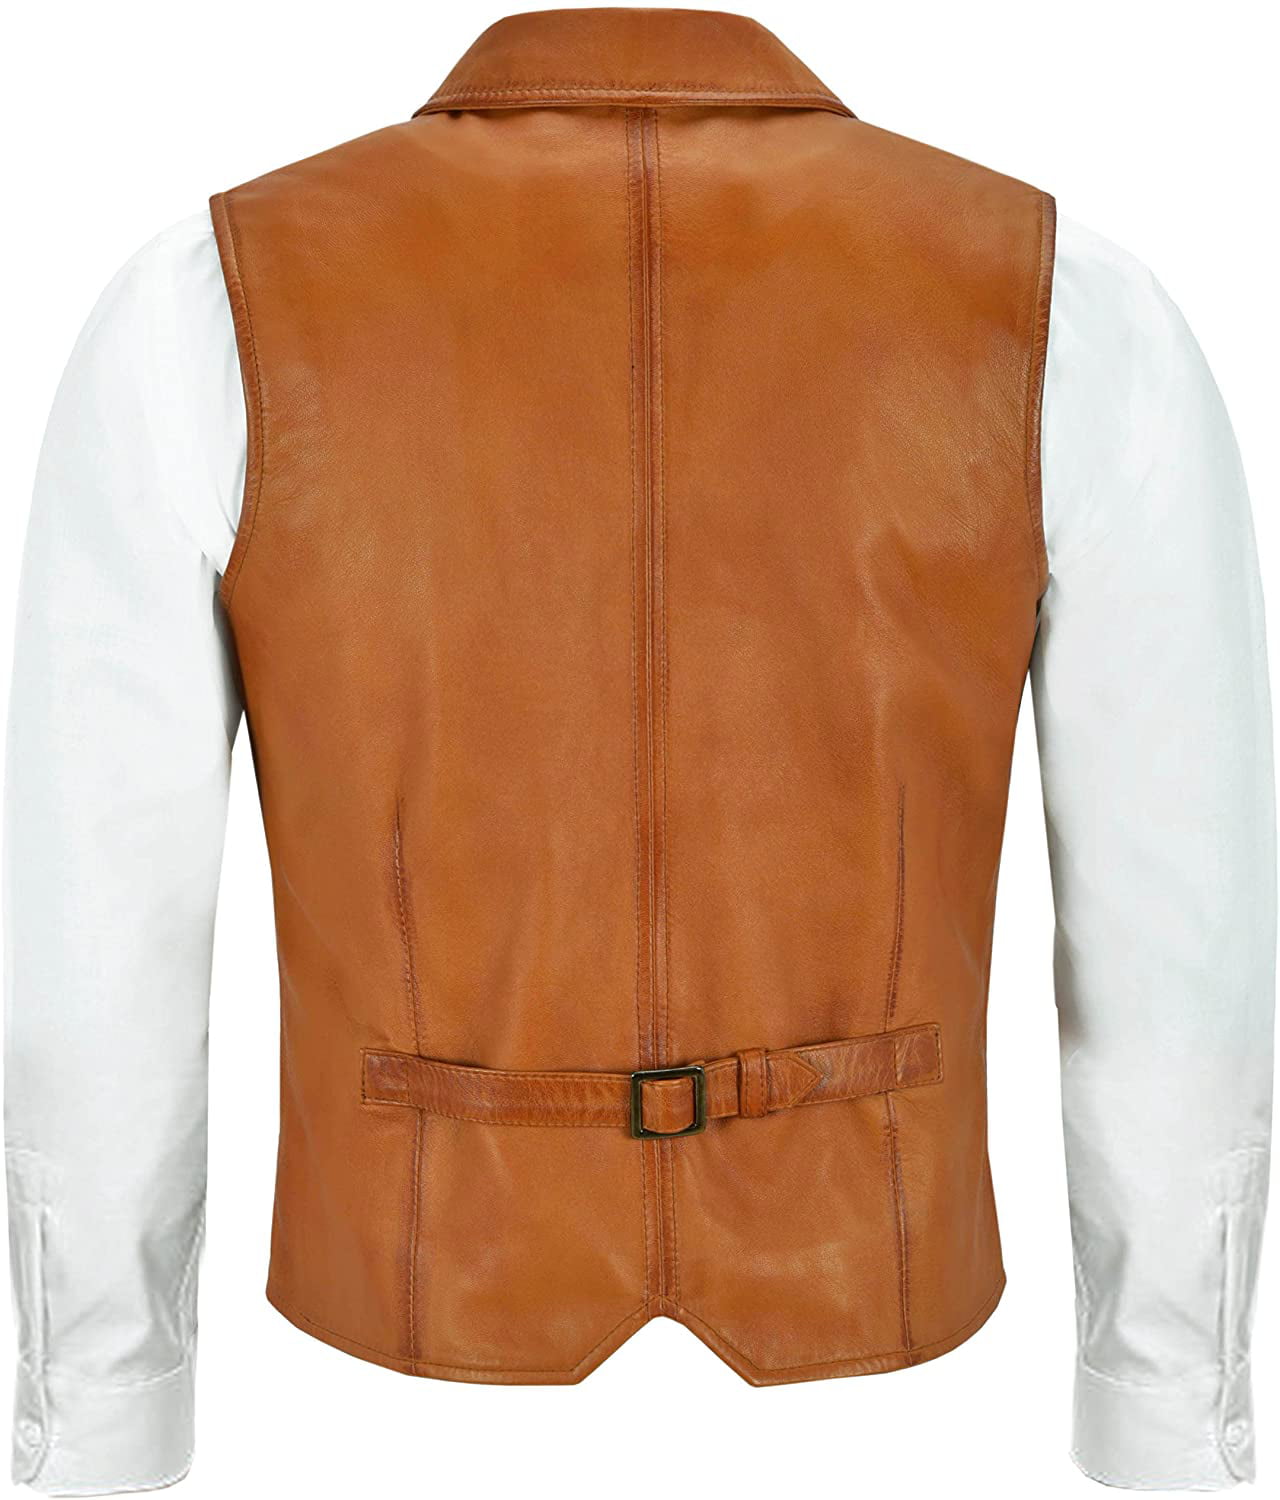 Mens Leather Waistcoat Vest Cherry Gilet Party Fashion Stylish Napa Leather Vest